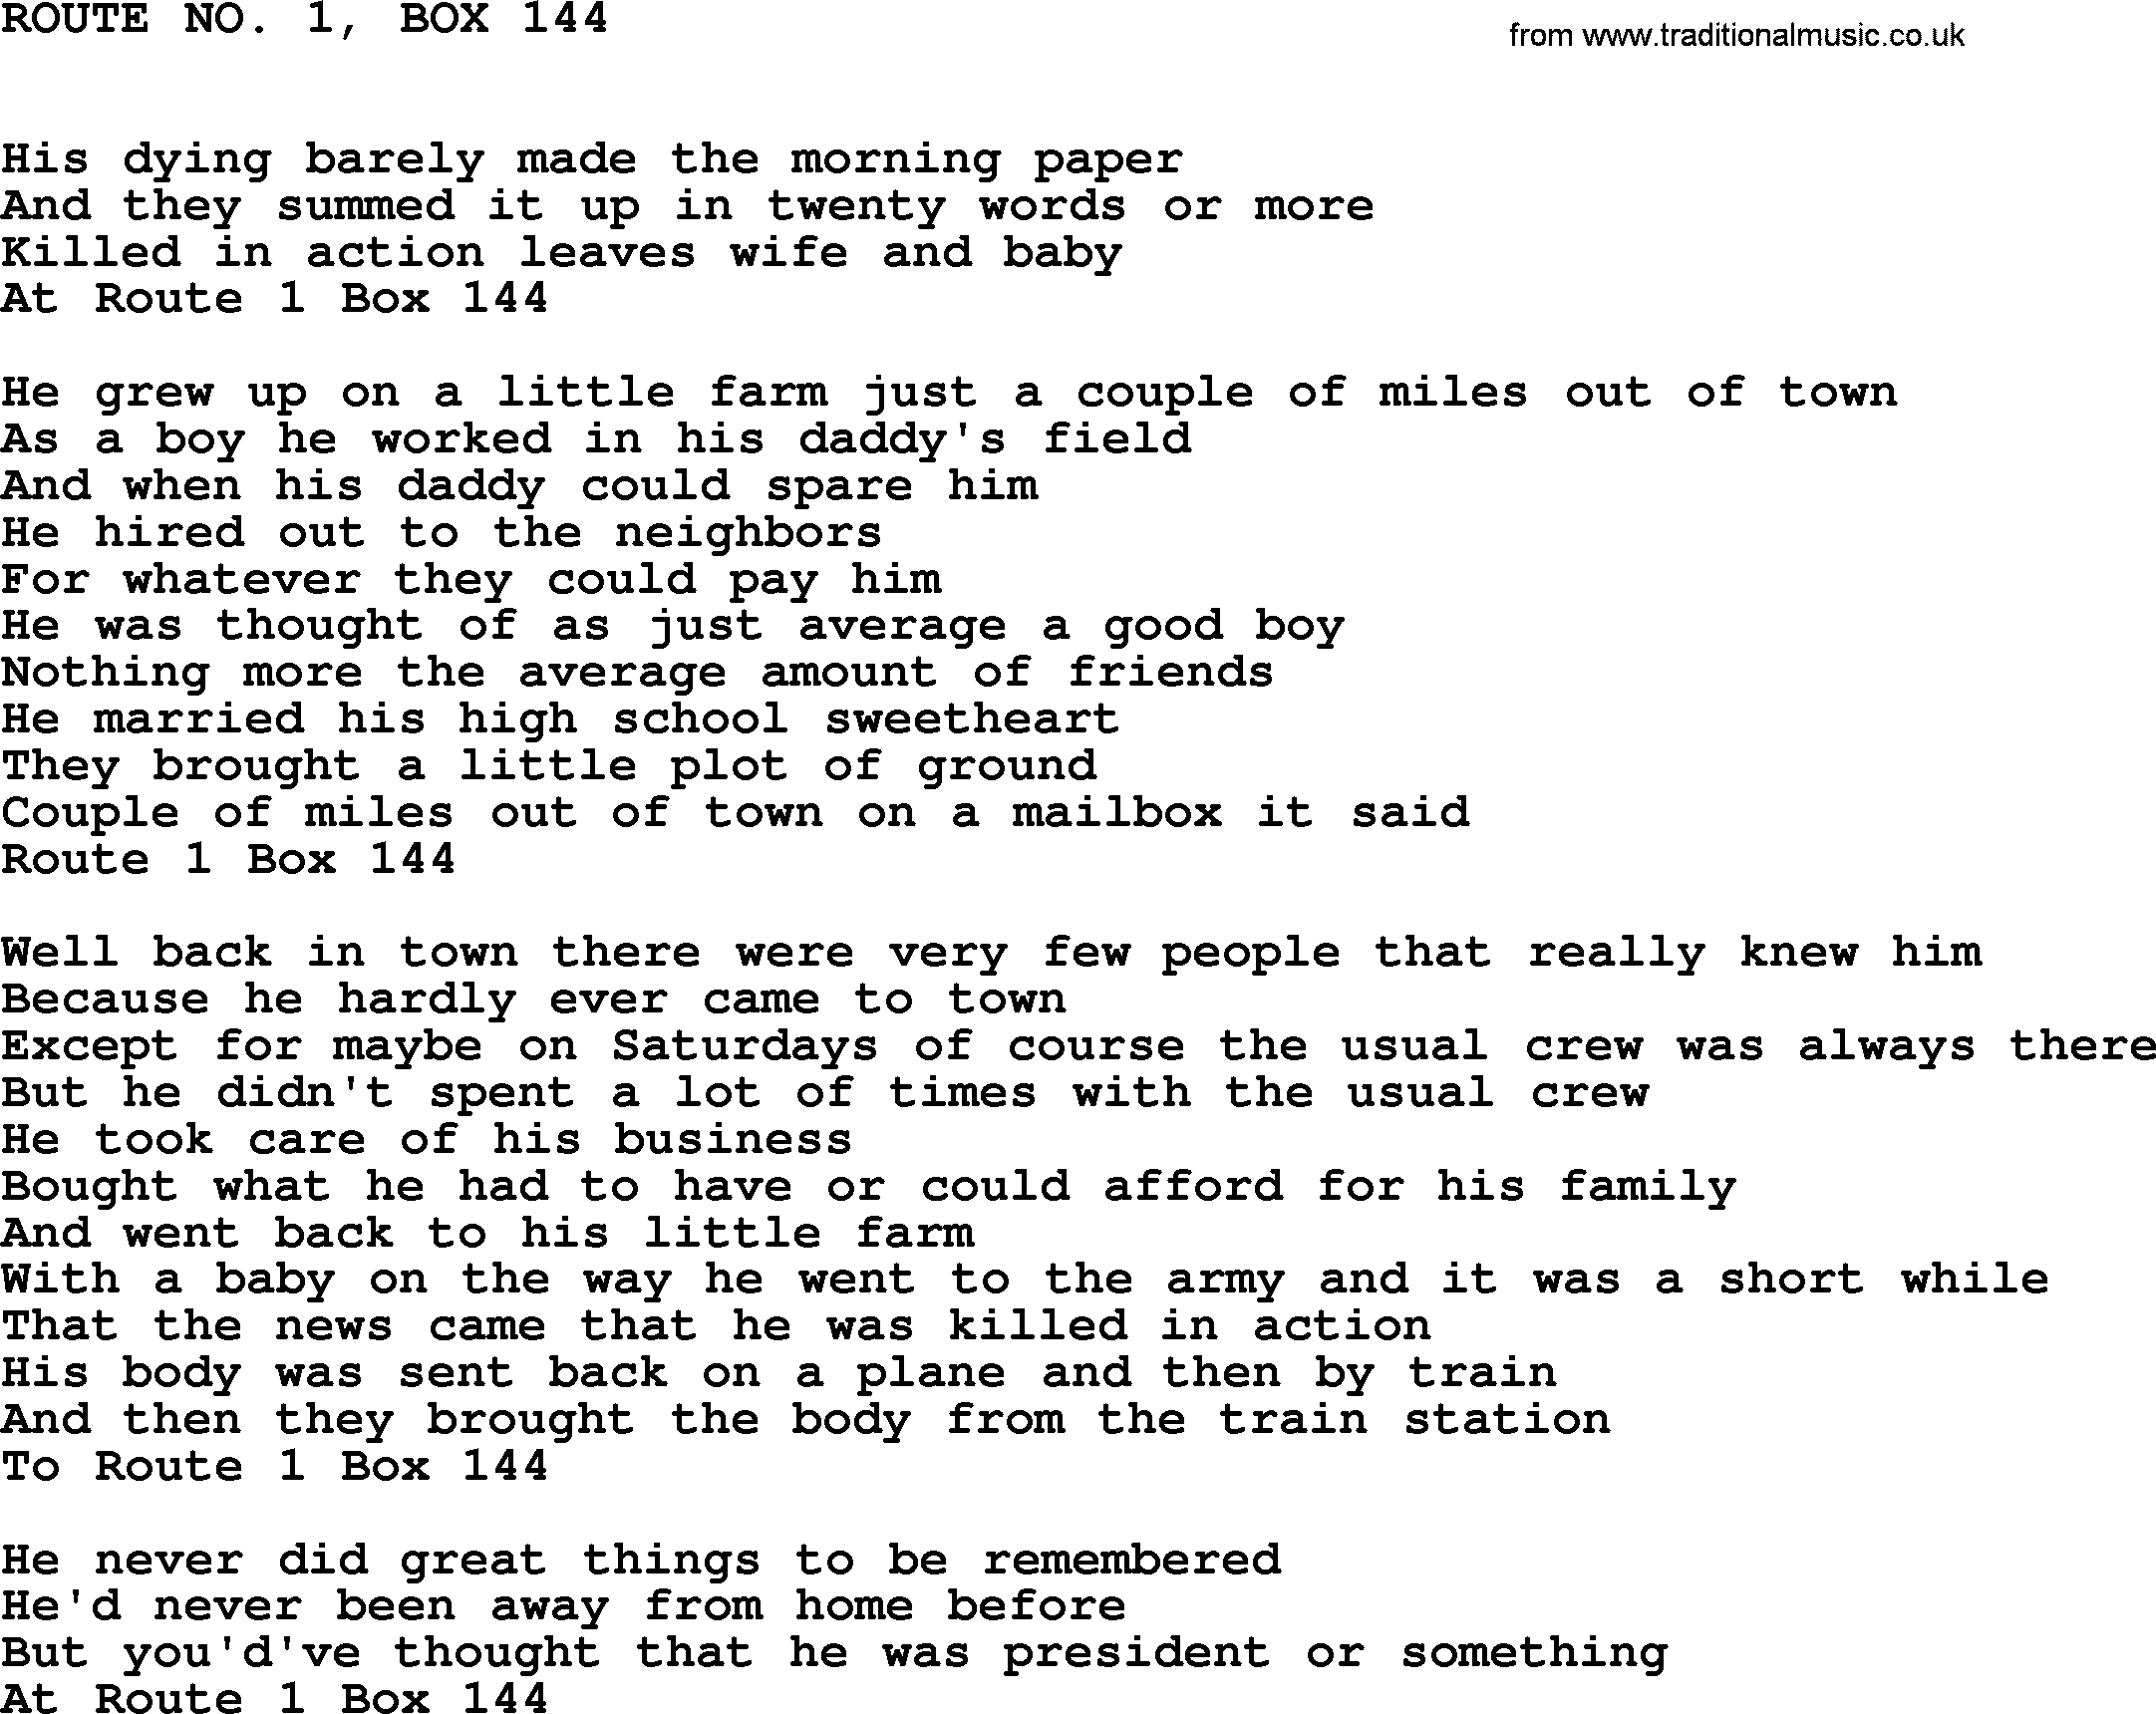 Johnny Cash song Route No. 1, Box 144.txt lyrics